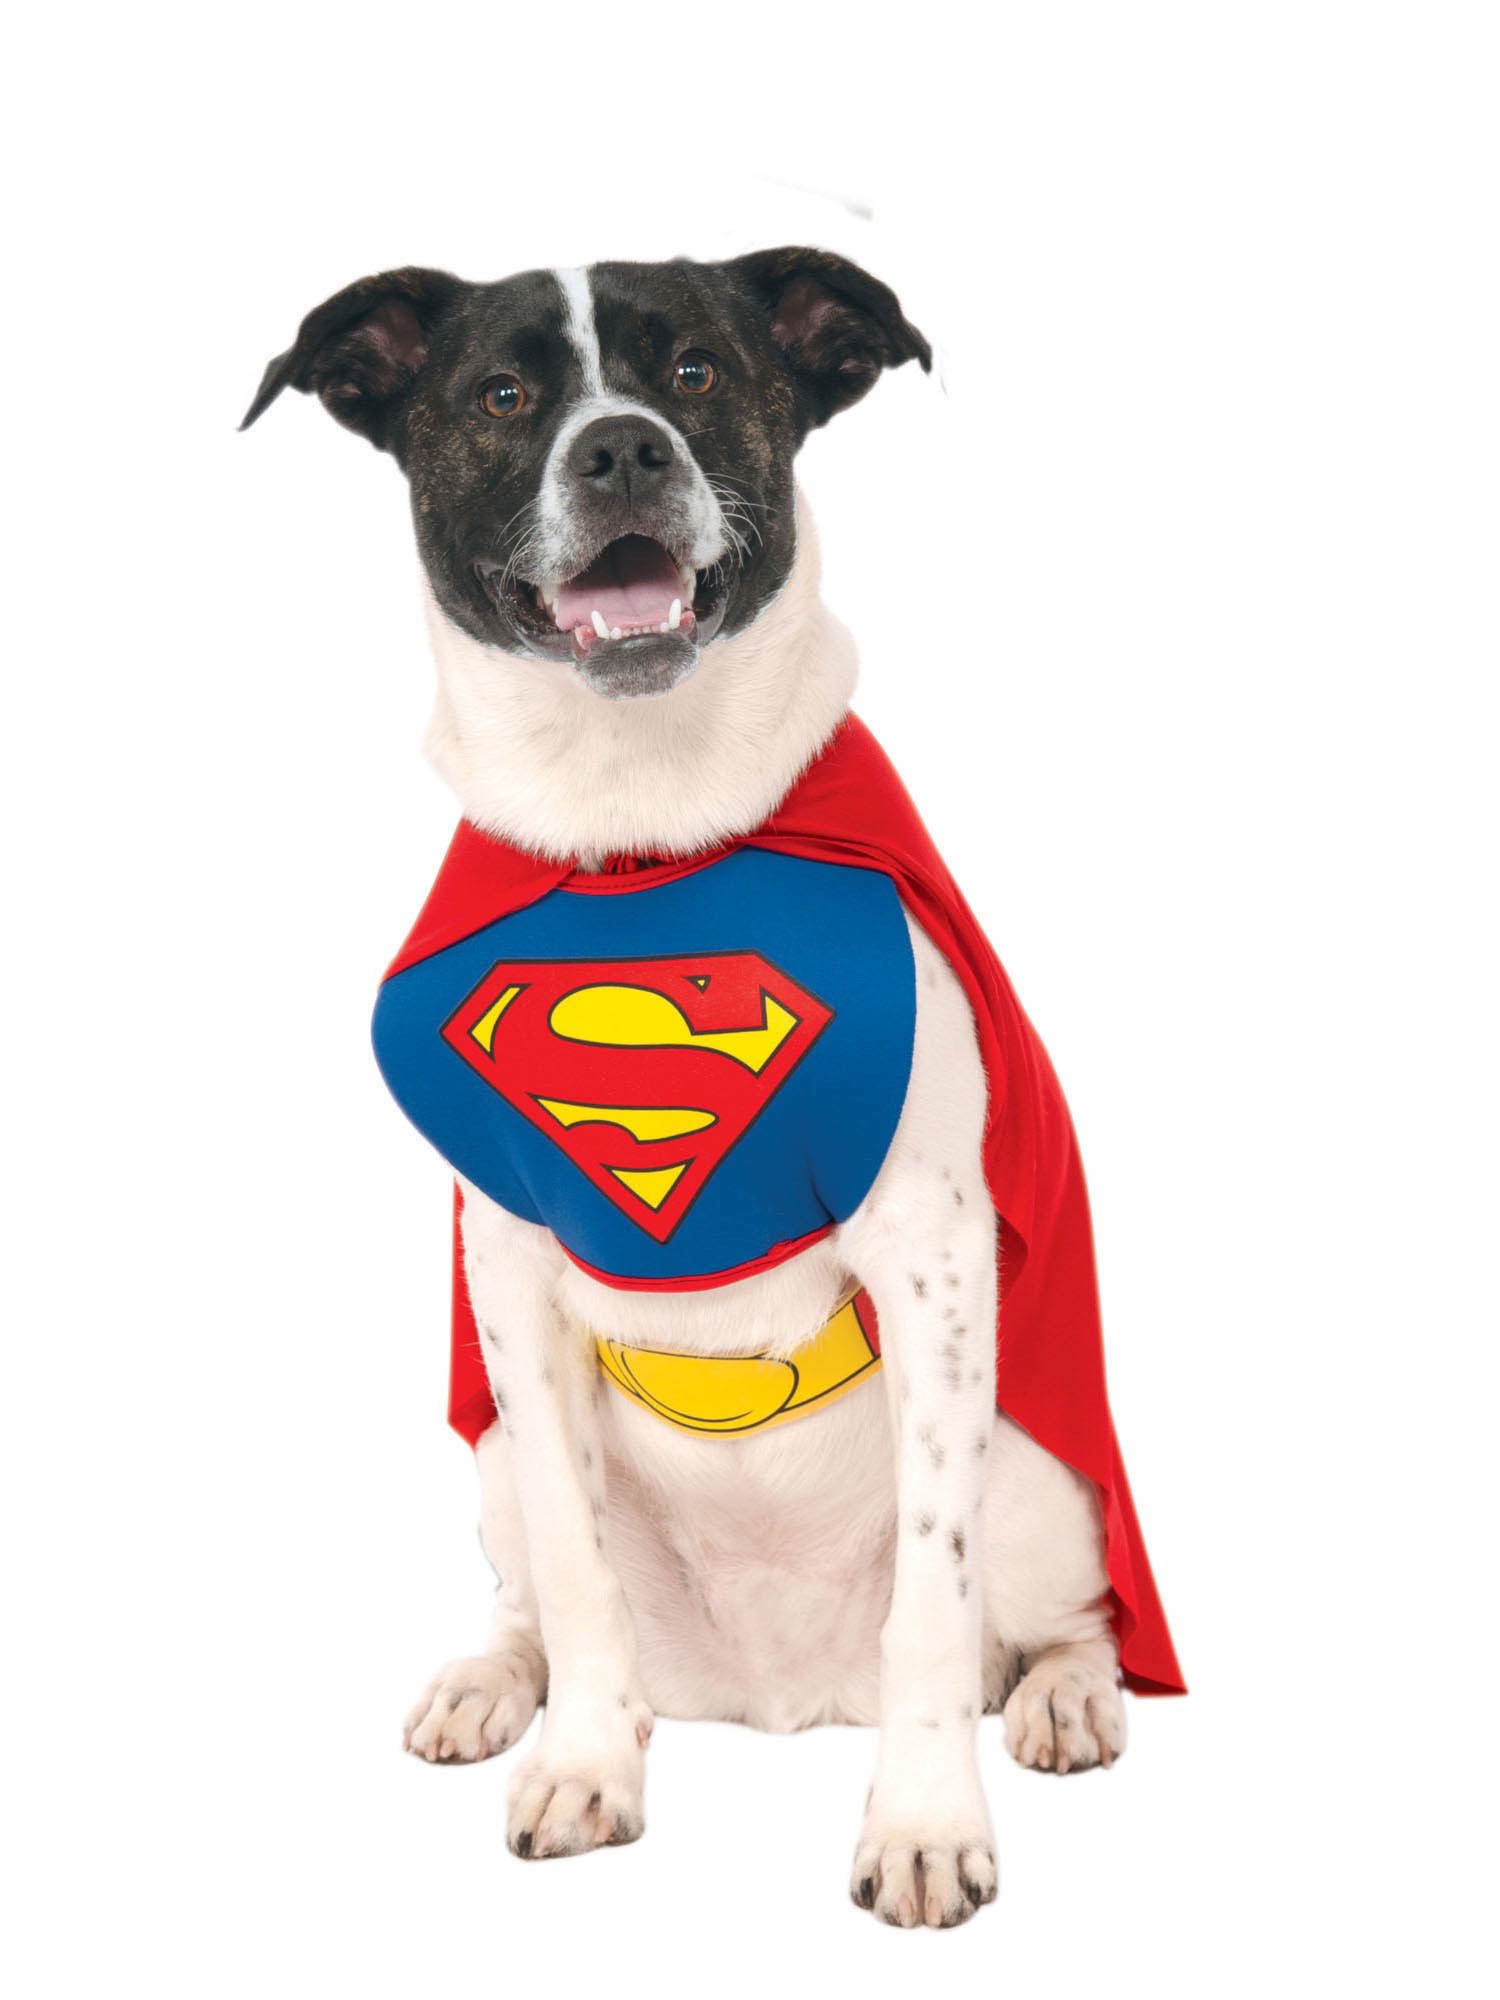 Superman Dog Costume